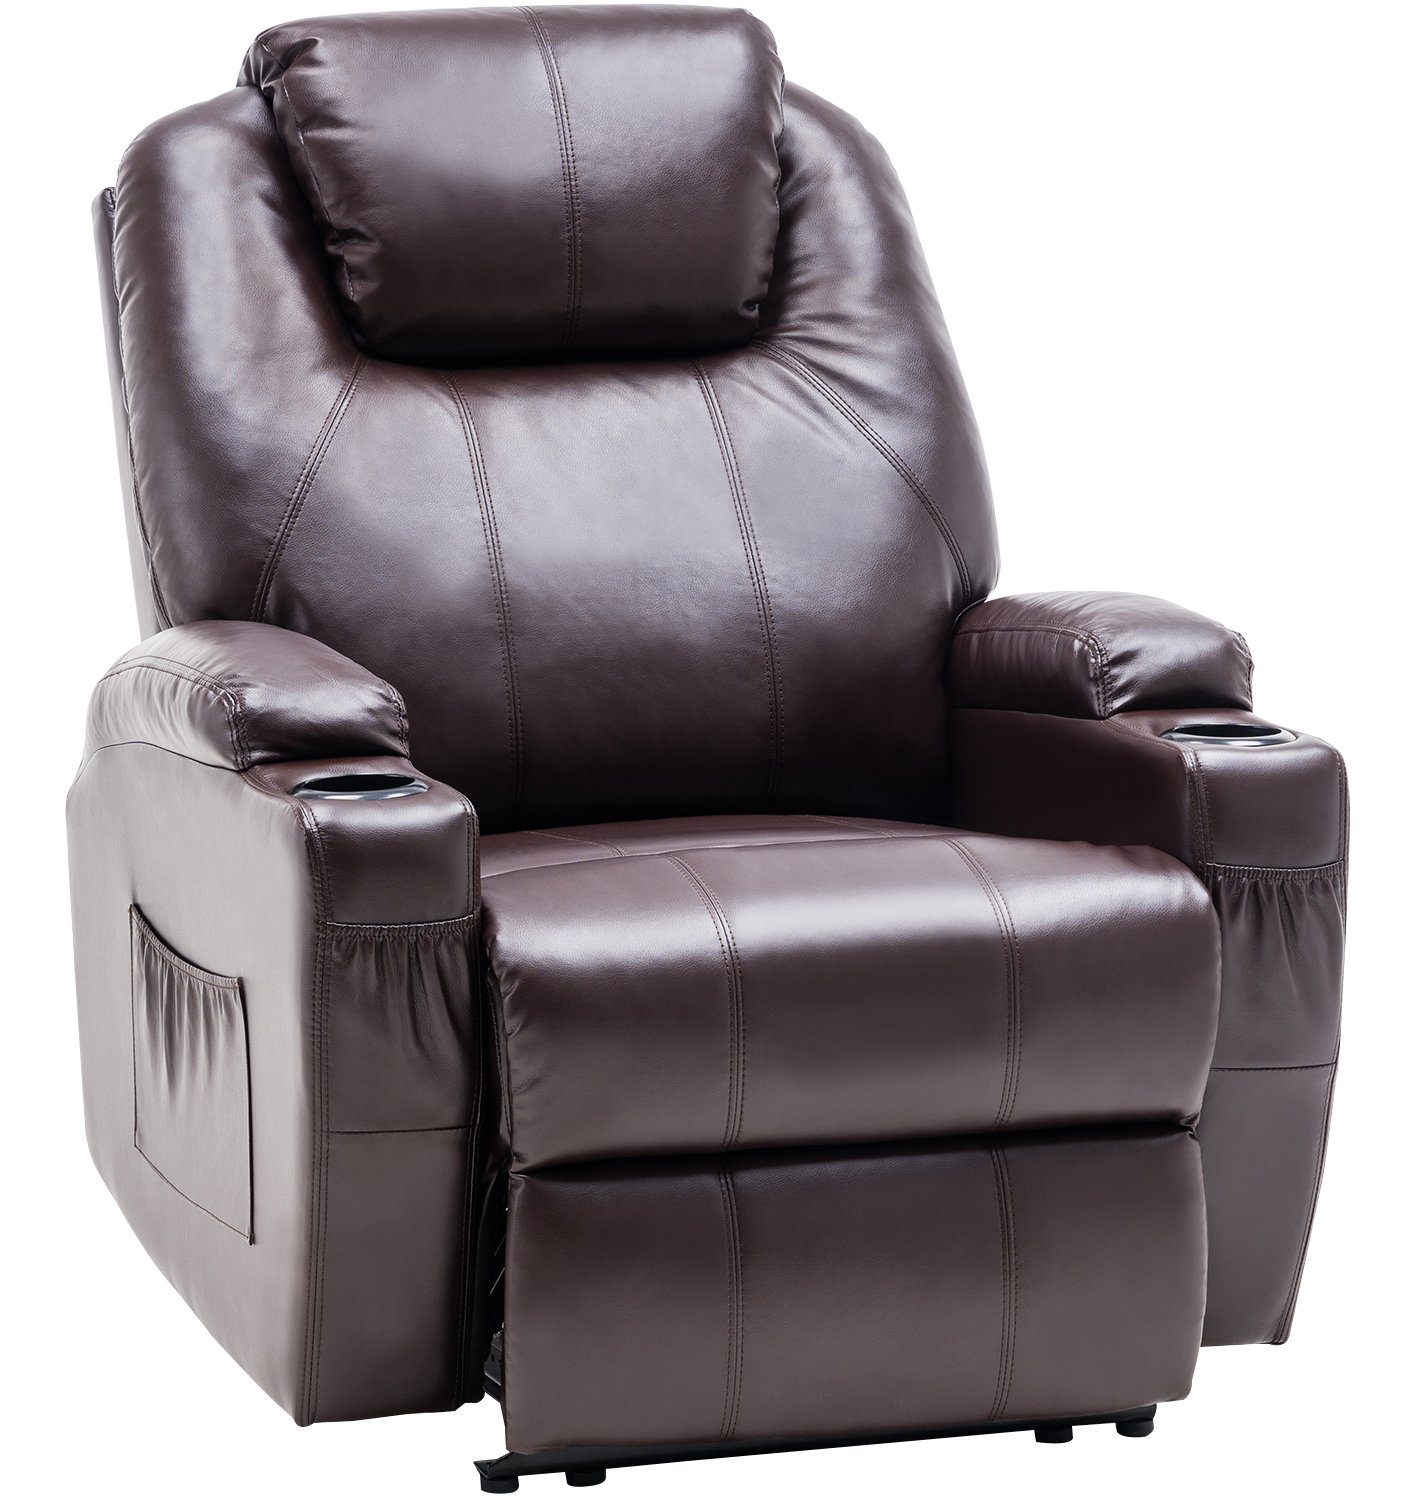 MCombo Relaxsessel MCombo Elektrisch Relaxsessel Massagesessel Fernsehsessel 7061, mit Liegefunktion, mit Vibration Heizung, Kunstleder, 92 x 92 x 109 cm